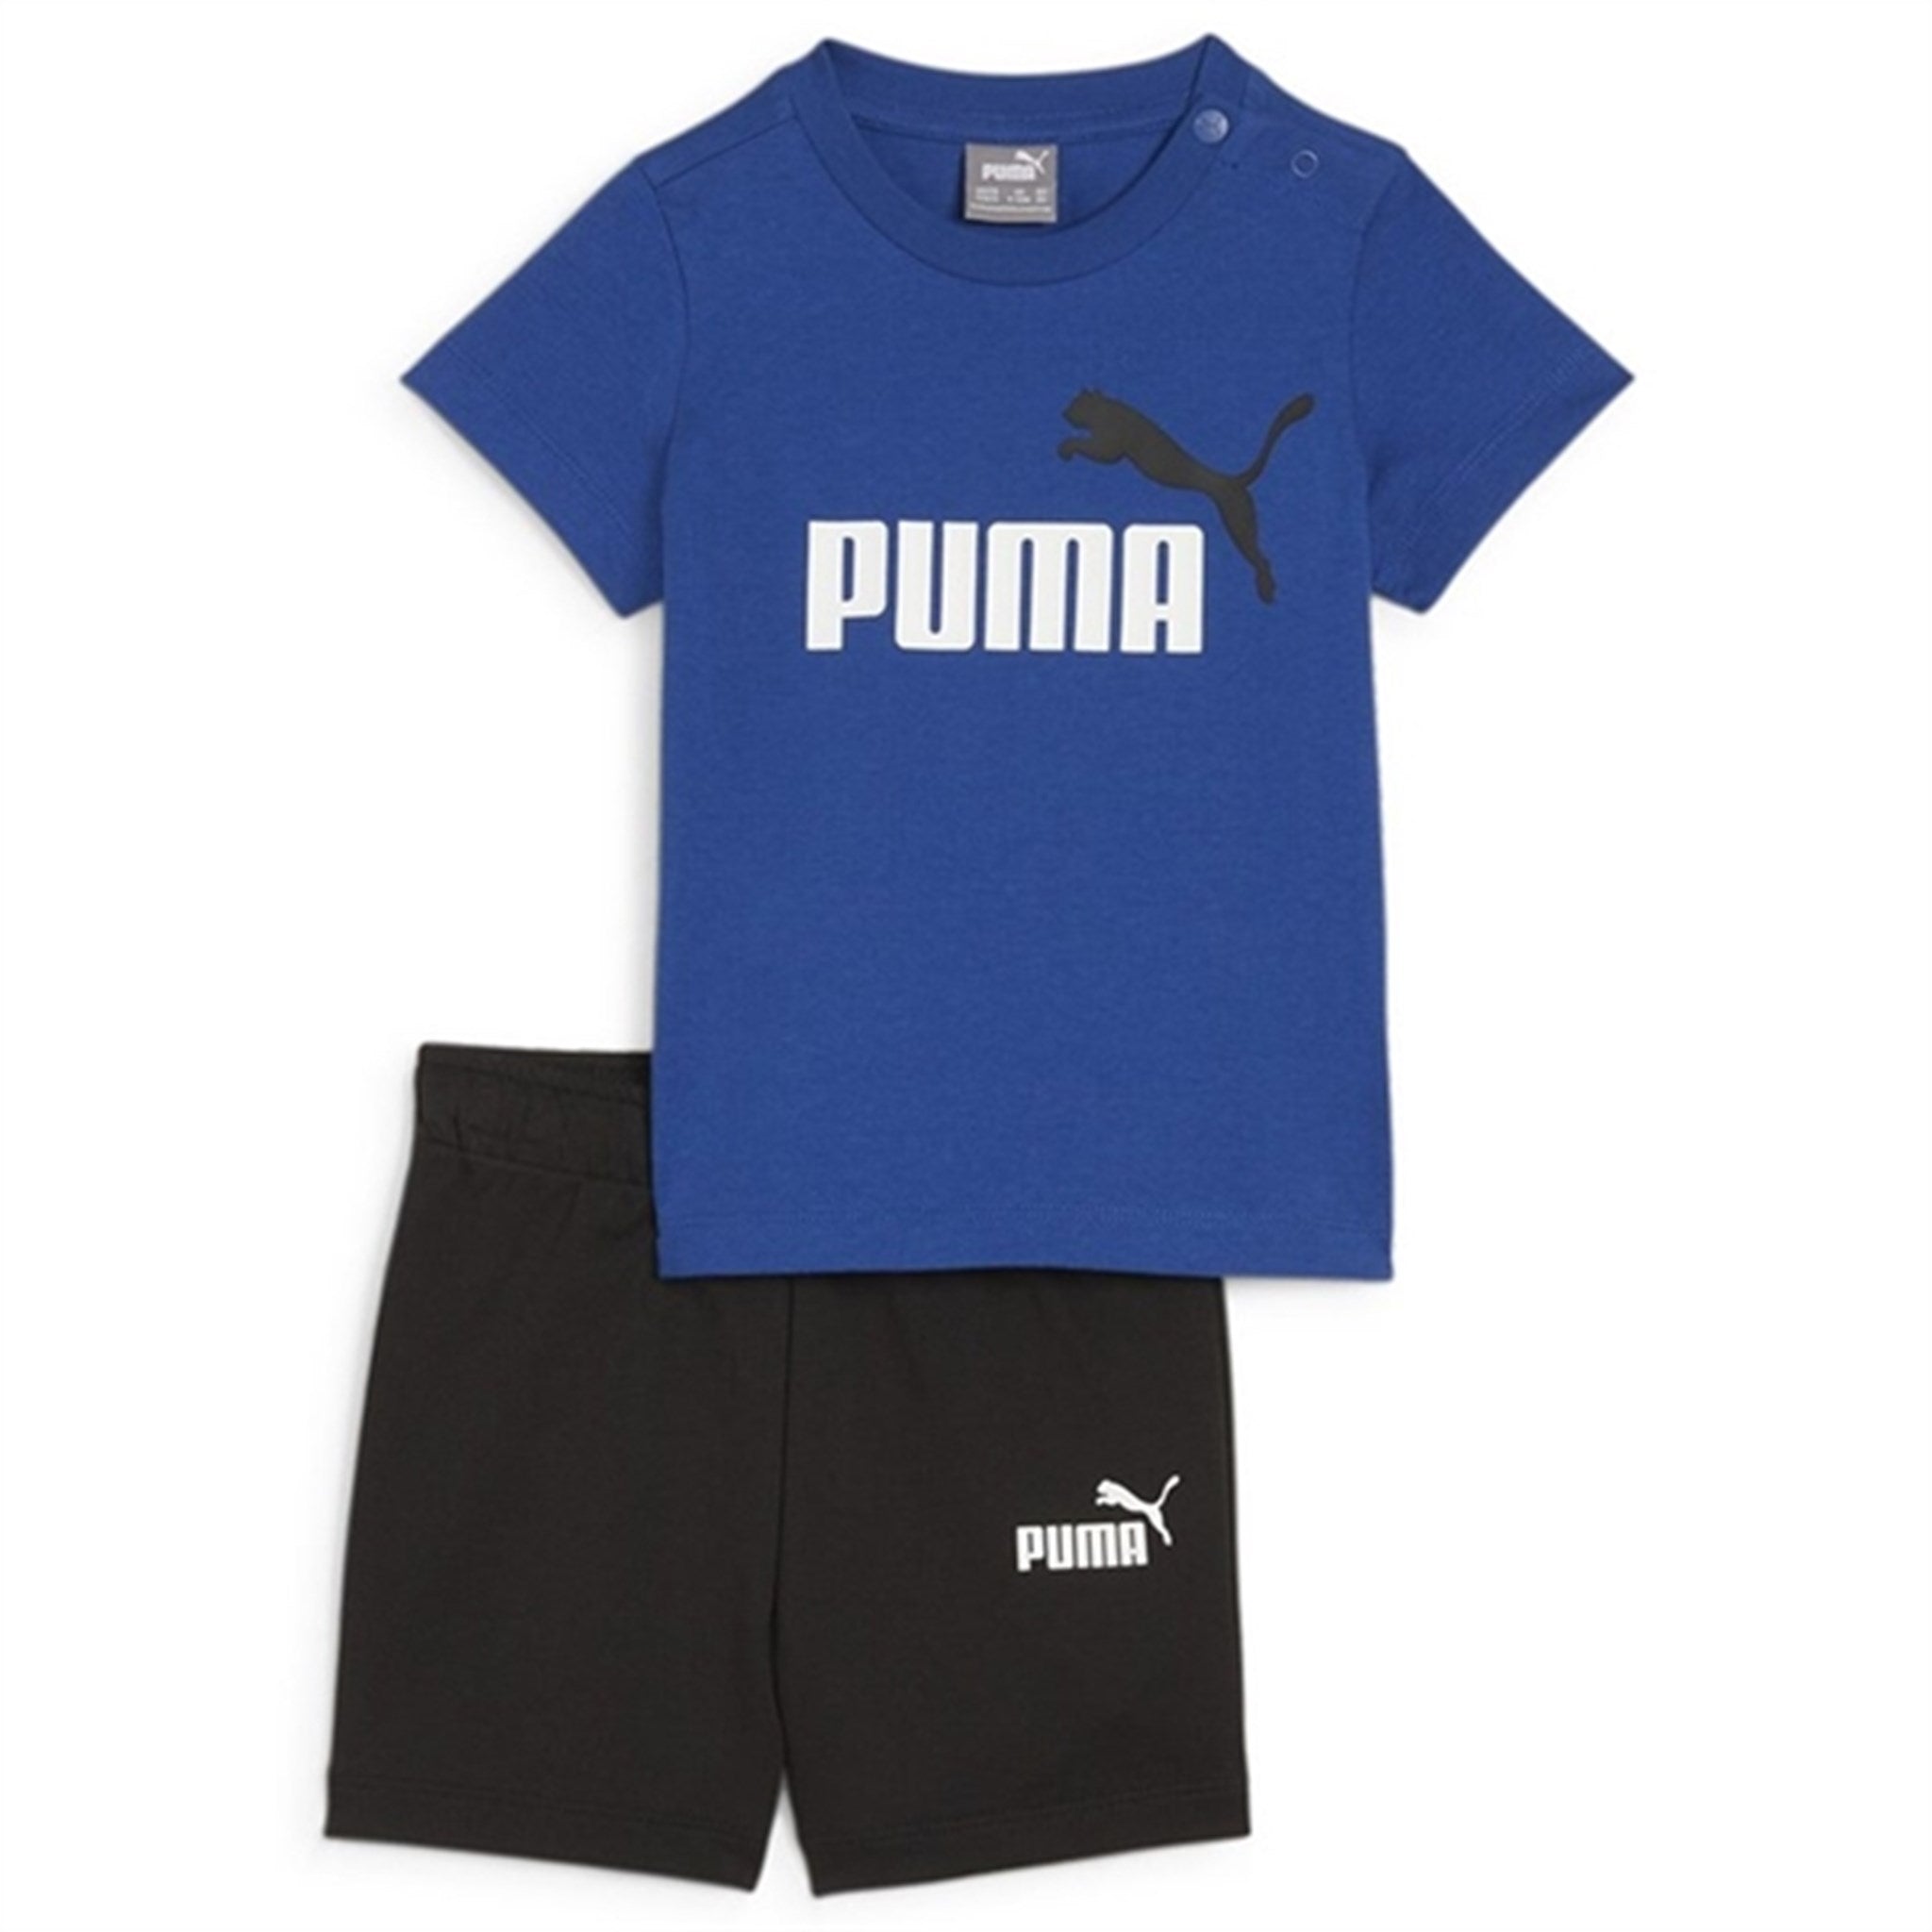 Puma Minicats T-Shirt And Shorts Set Blue